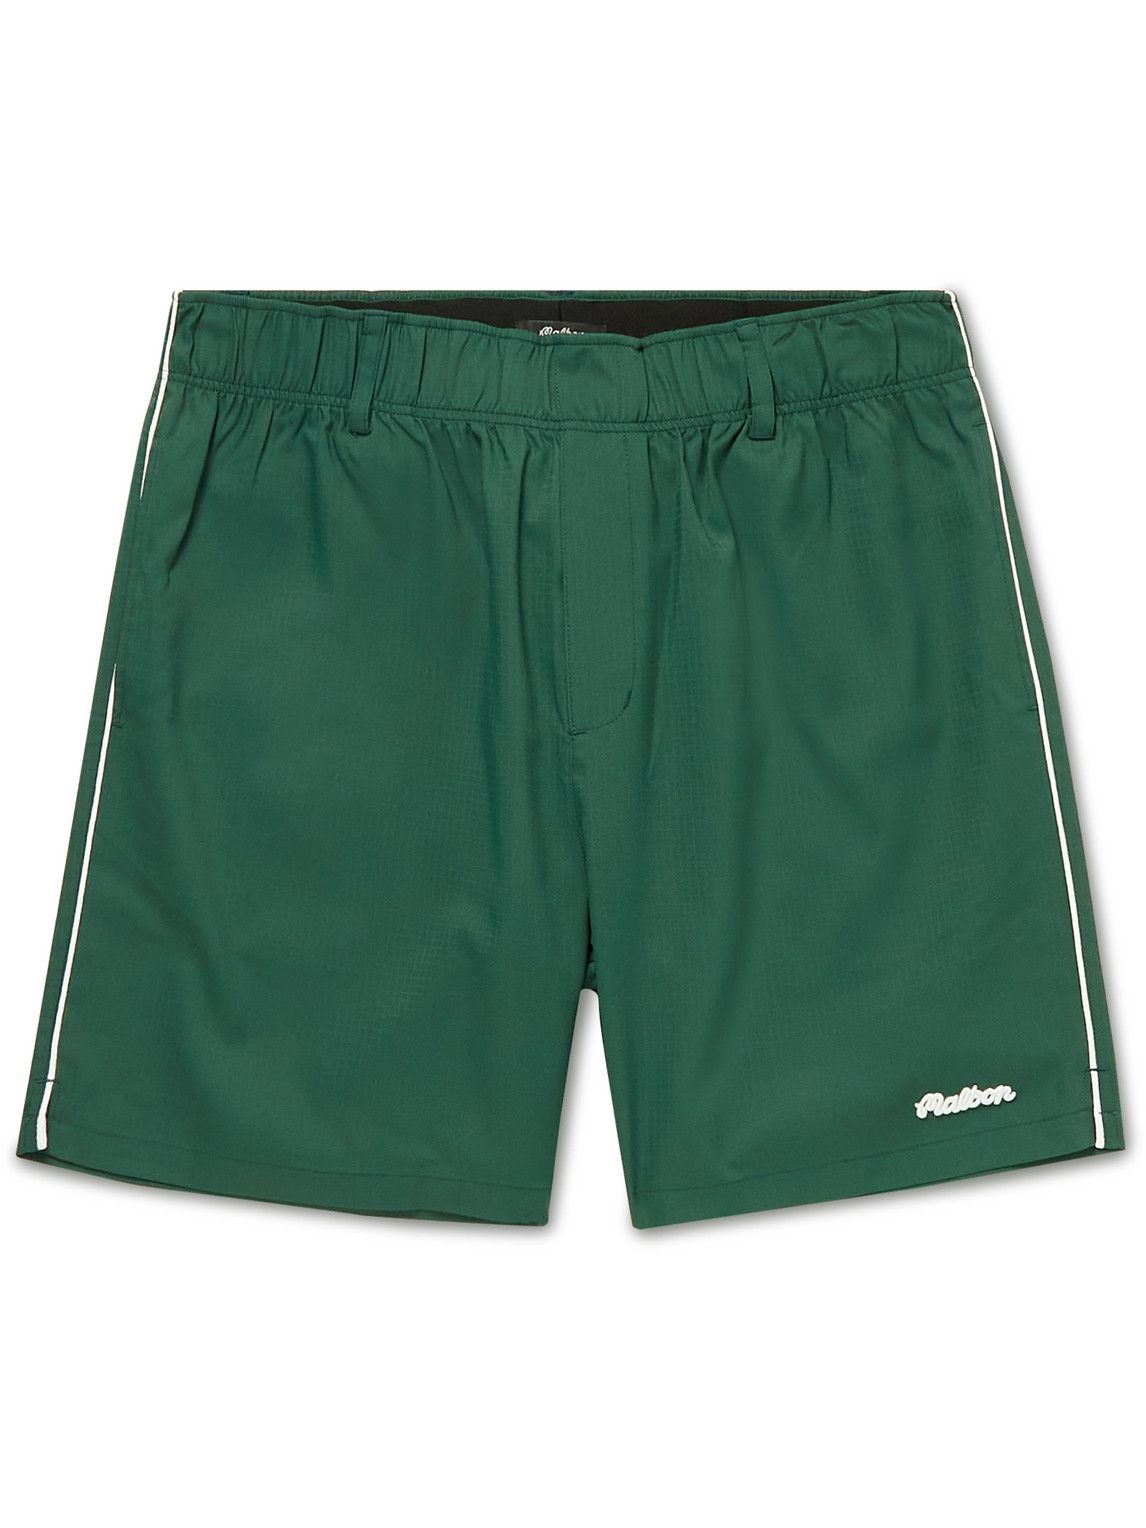 Malbon Golf - Bon Sport Piped Ripstop Golf Shorts - Green Malbon Golf